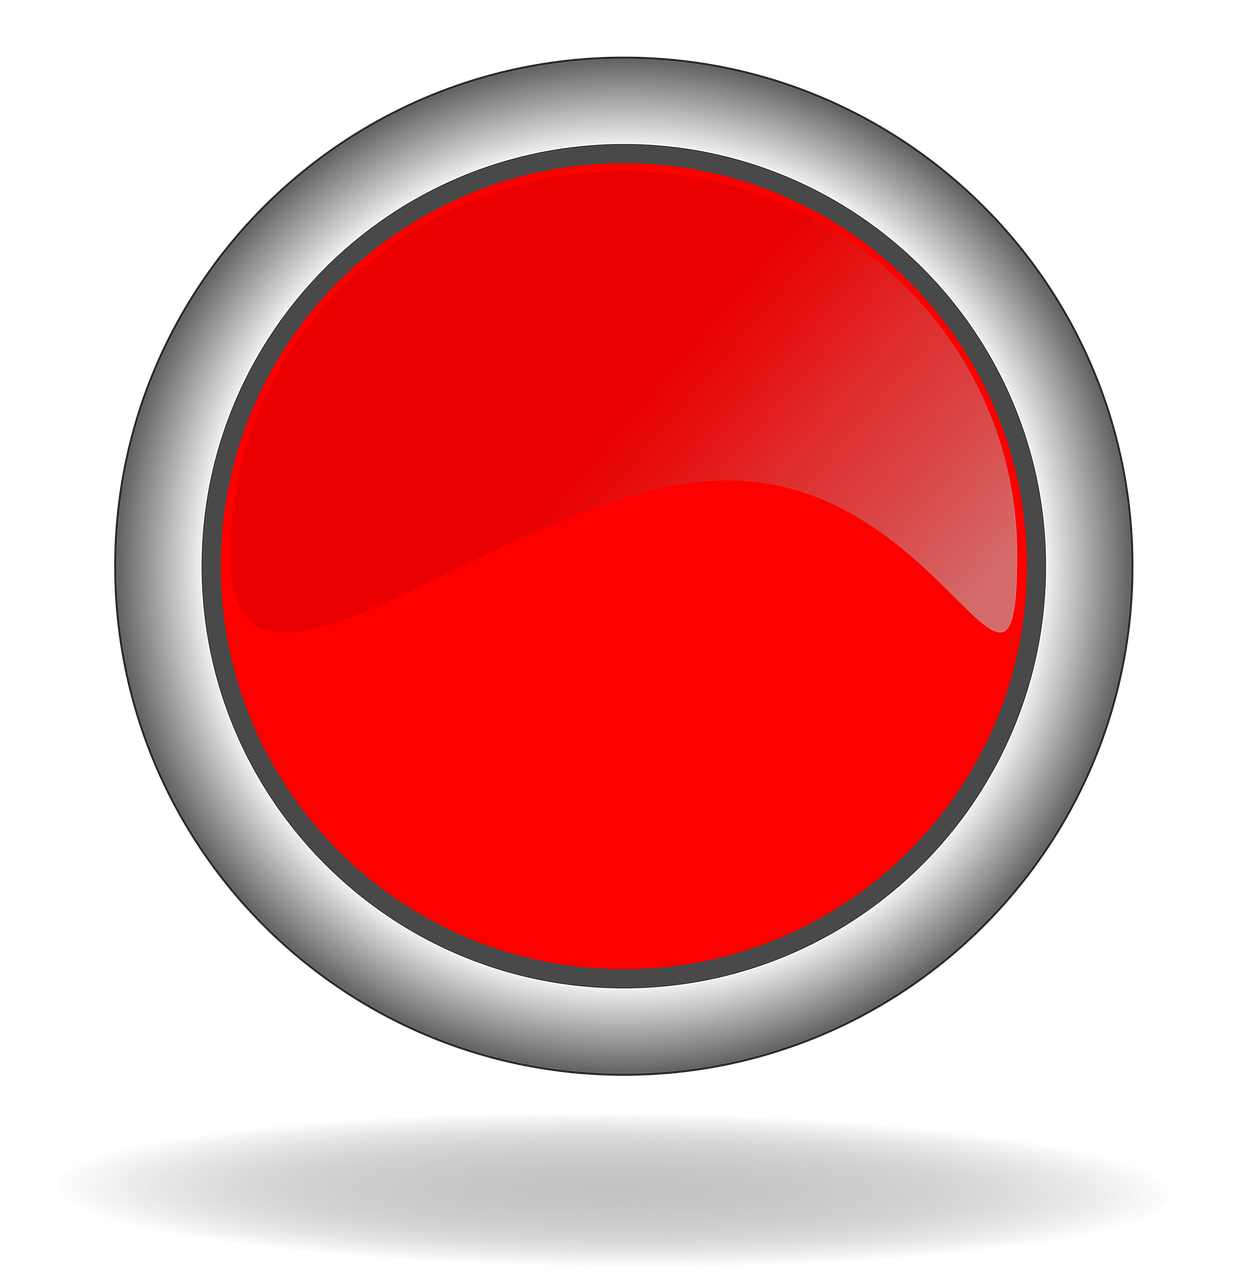 red button button icon free photo